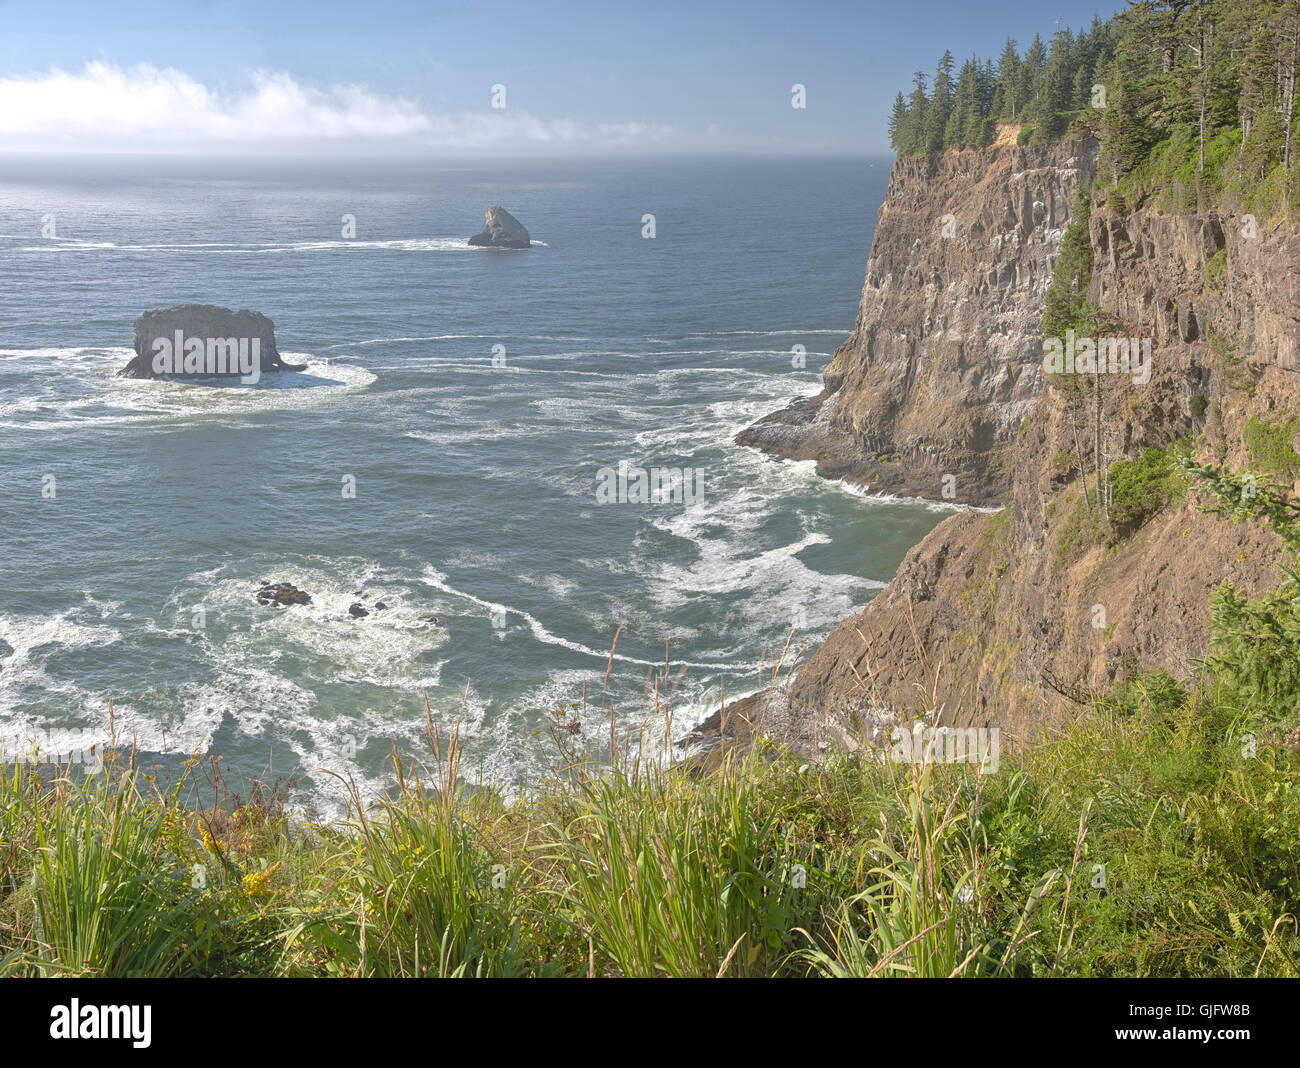 Cape Meares beach cliffs and surroundings Oregon coast. Stock Photo